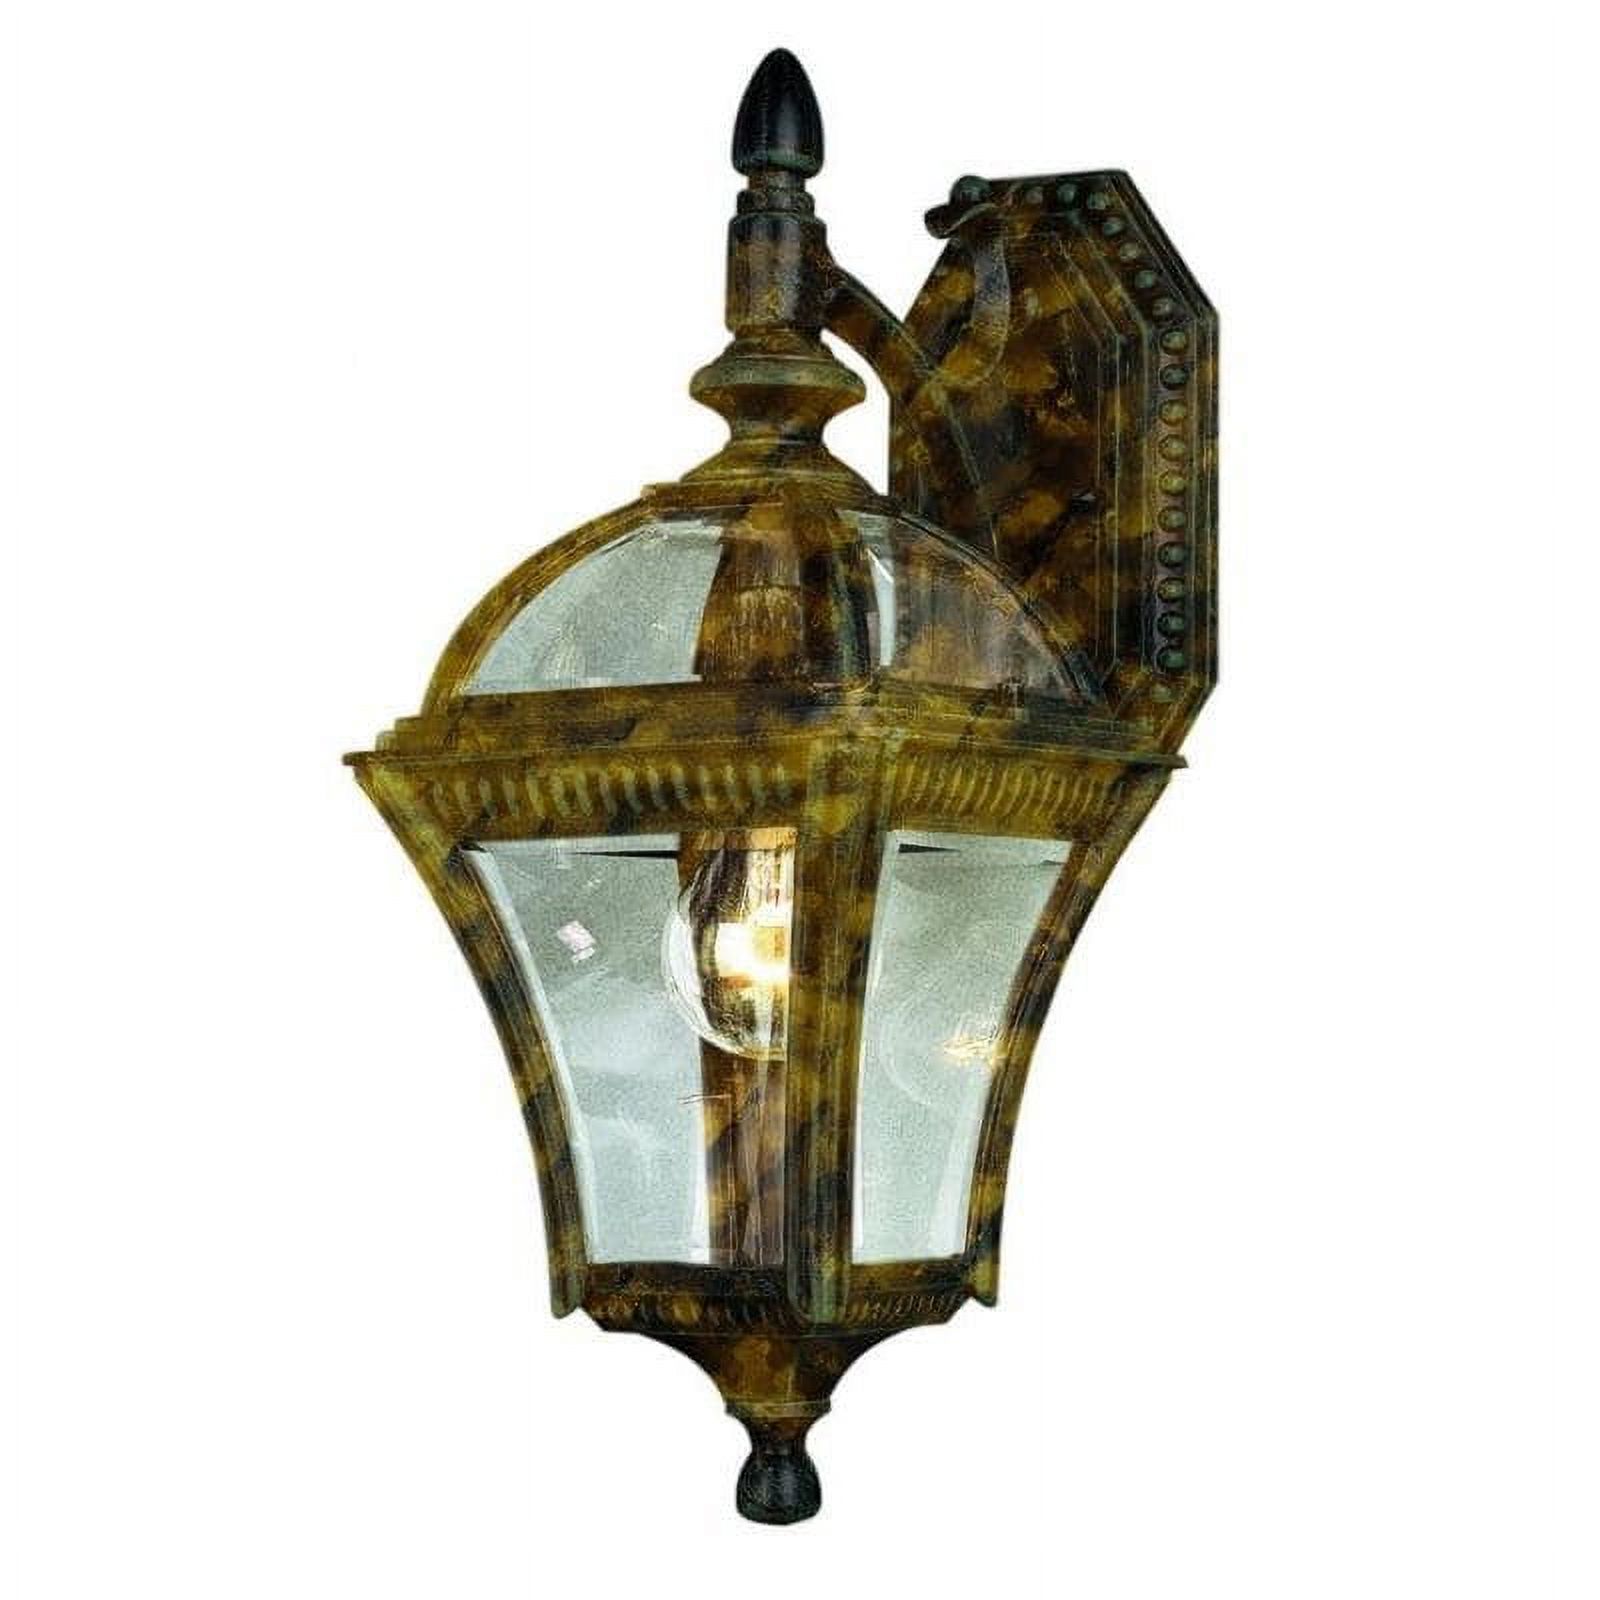 Trans Globe Lighting - One Light Small Outdoor Wall Lantern-Black Gold Finish - image 2 of 2